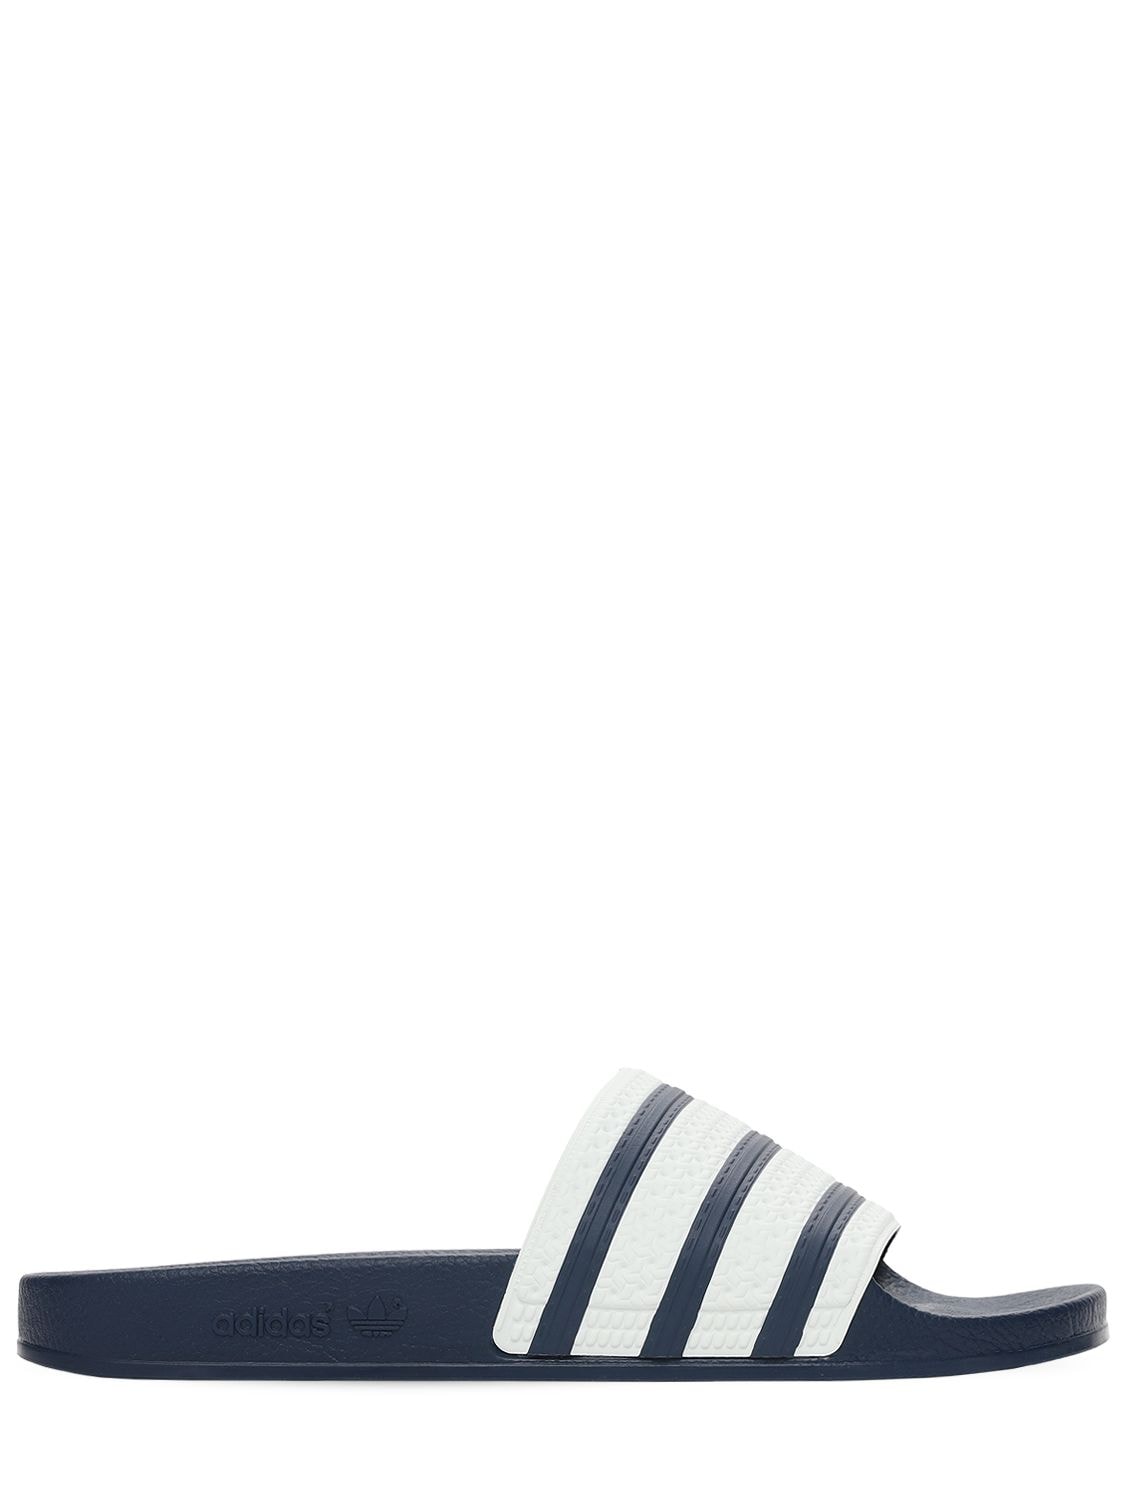 Adidas Originals Adilette Stripe Slide Sandals In Adiblu/wht